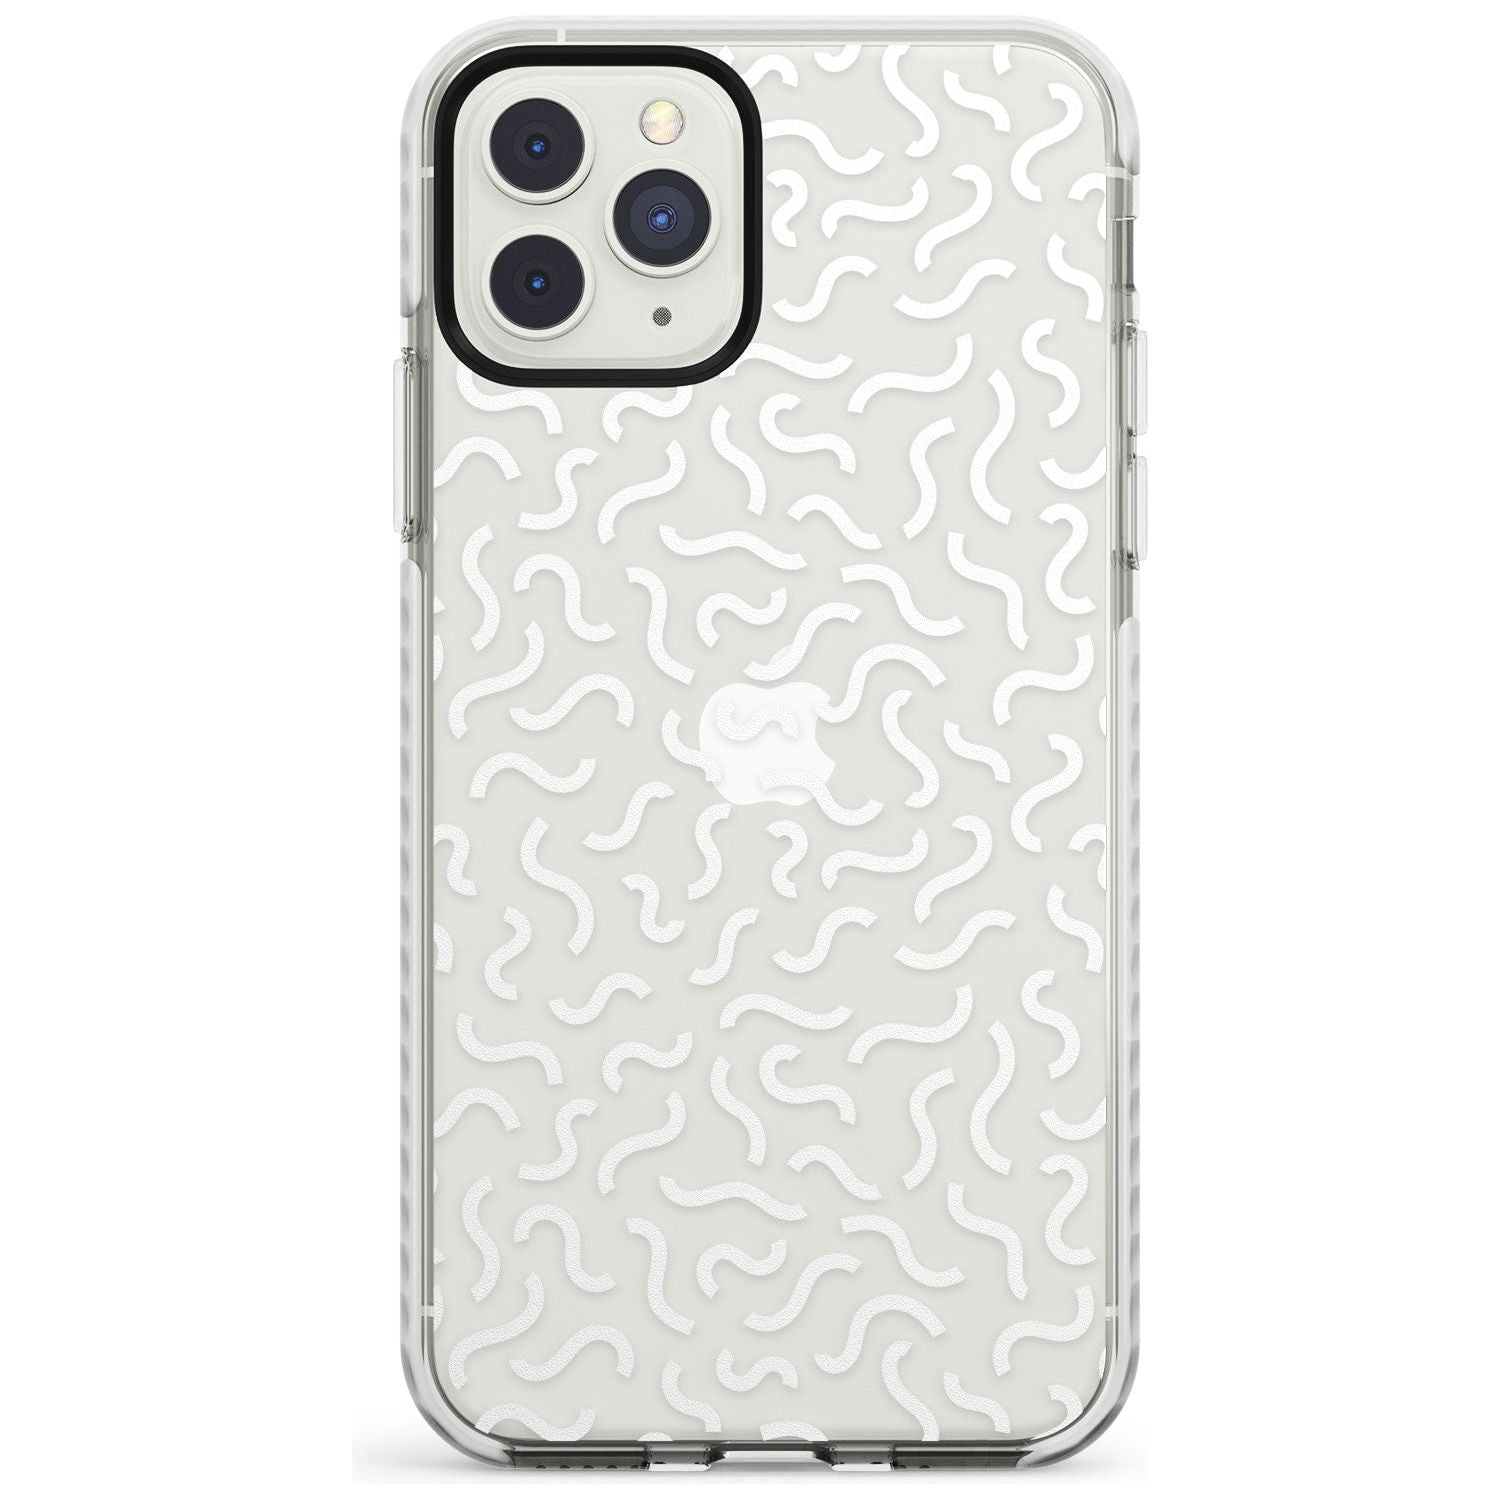 White Wavy Squiggles Memphis Retro Pattern Design Impact Phone Case for iPhone 11 Pro Max